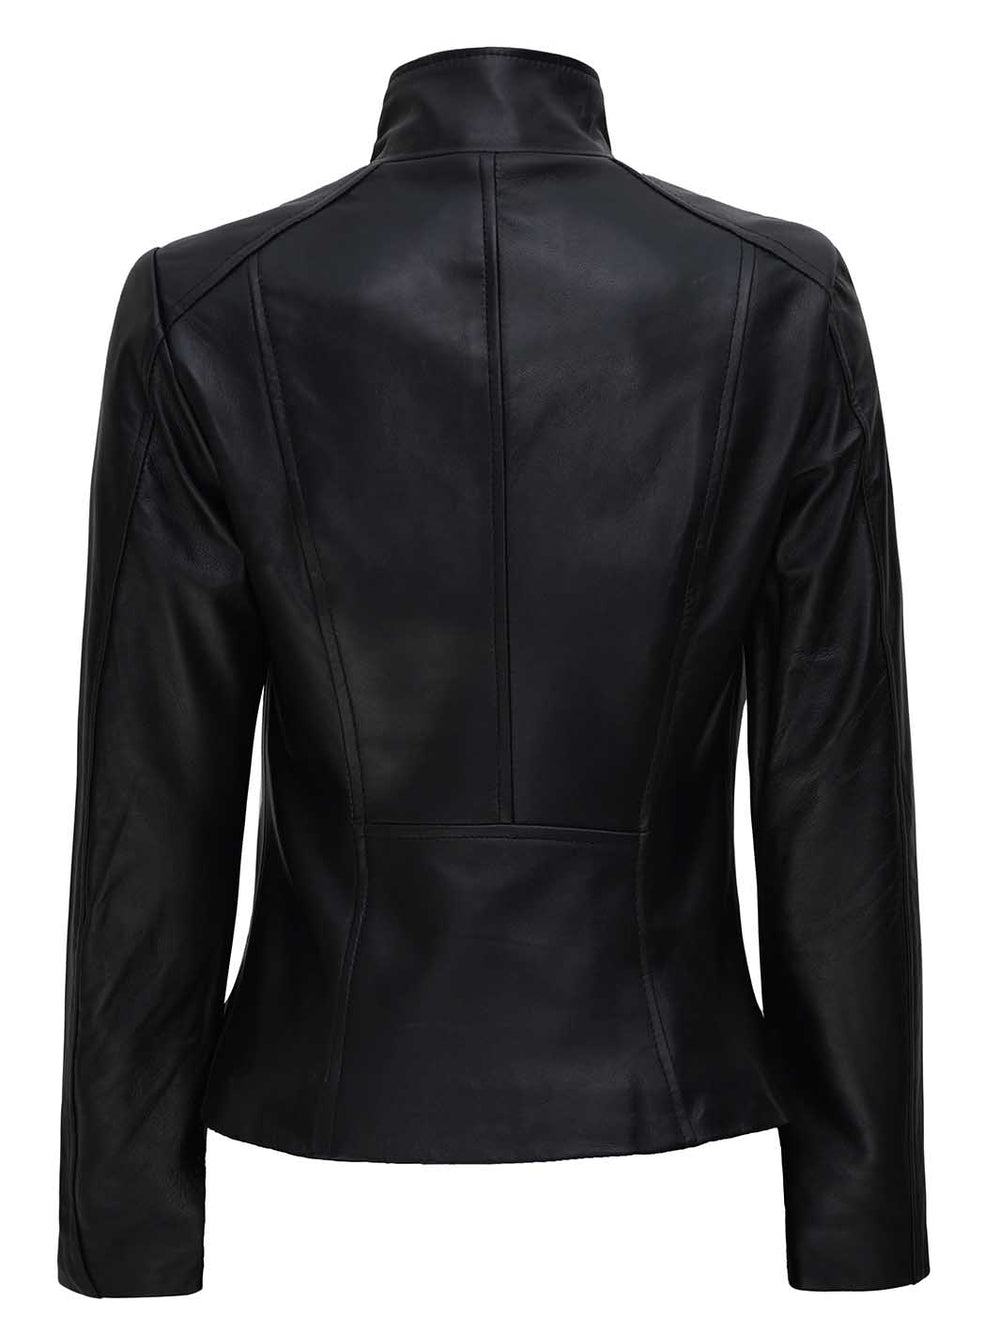 Arezzo Black Leather Jacket Women